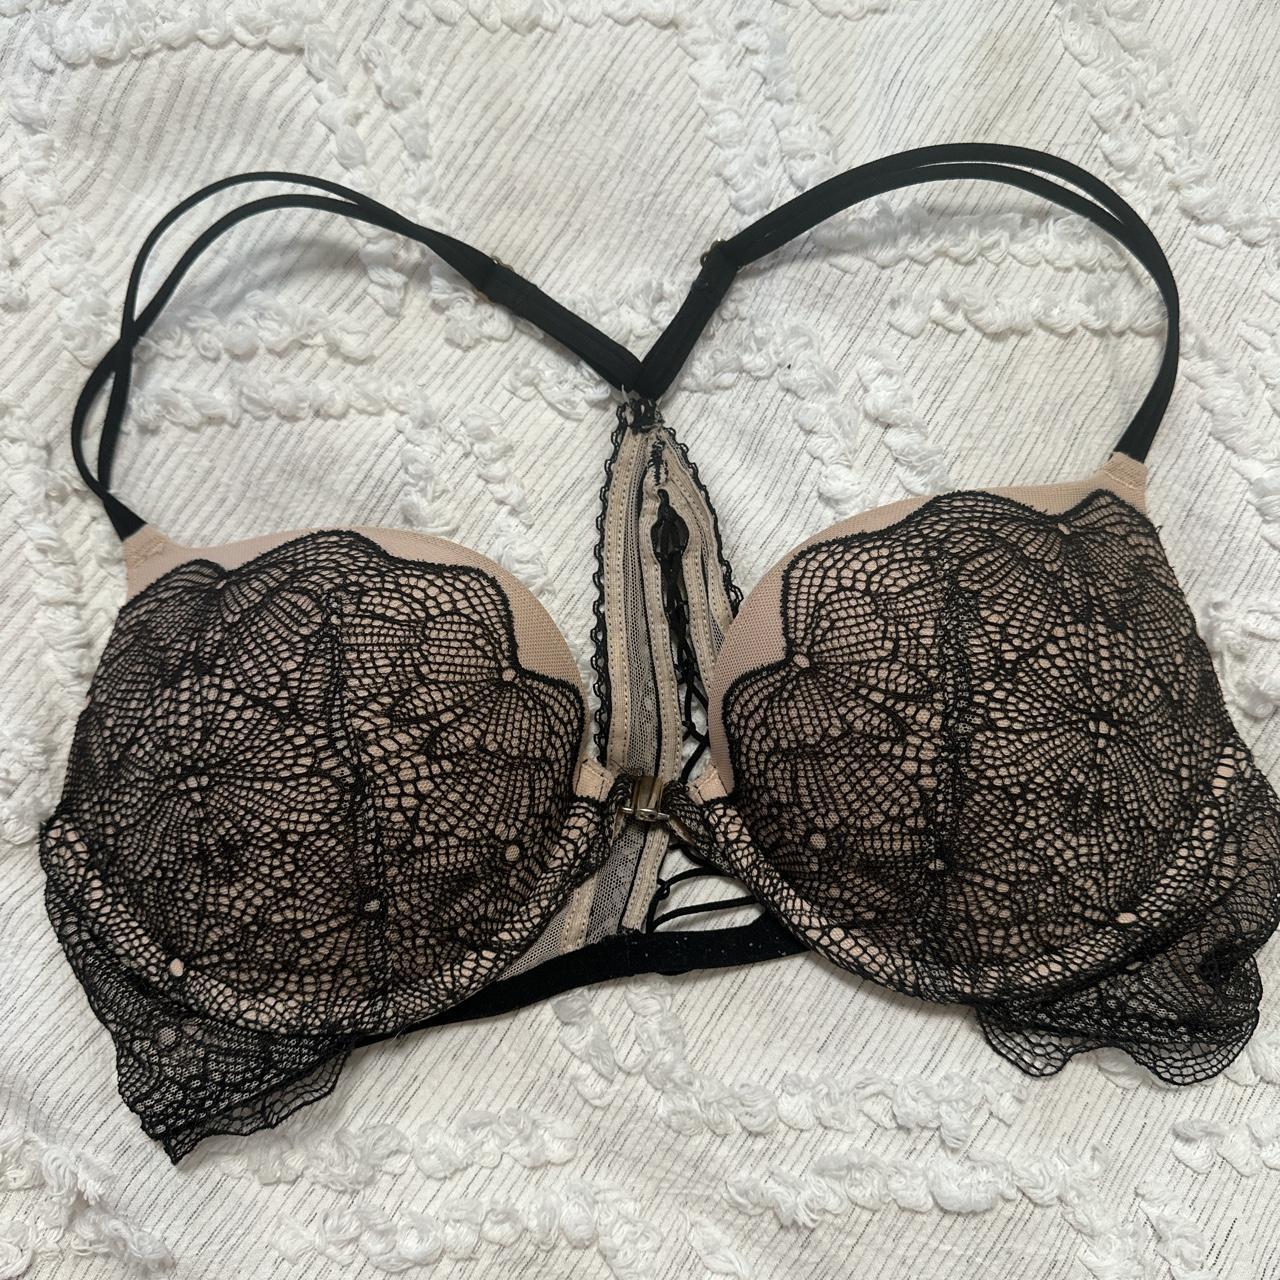 Lacy, black and nude Victoria's Secret bra, front - Depop